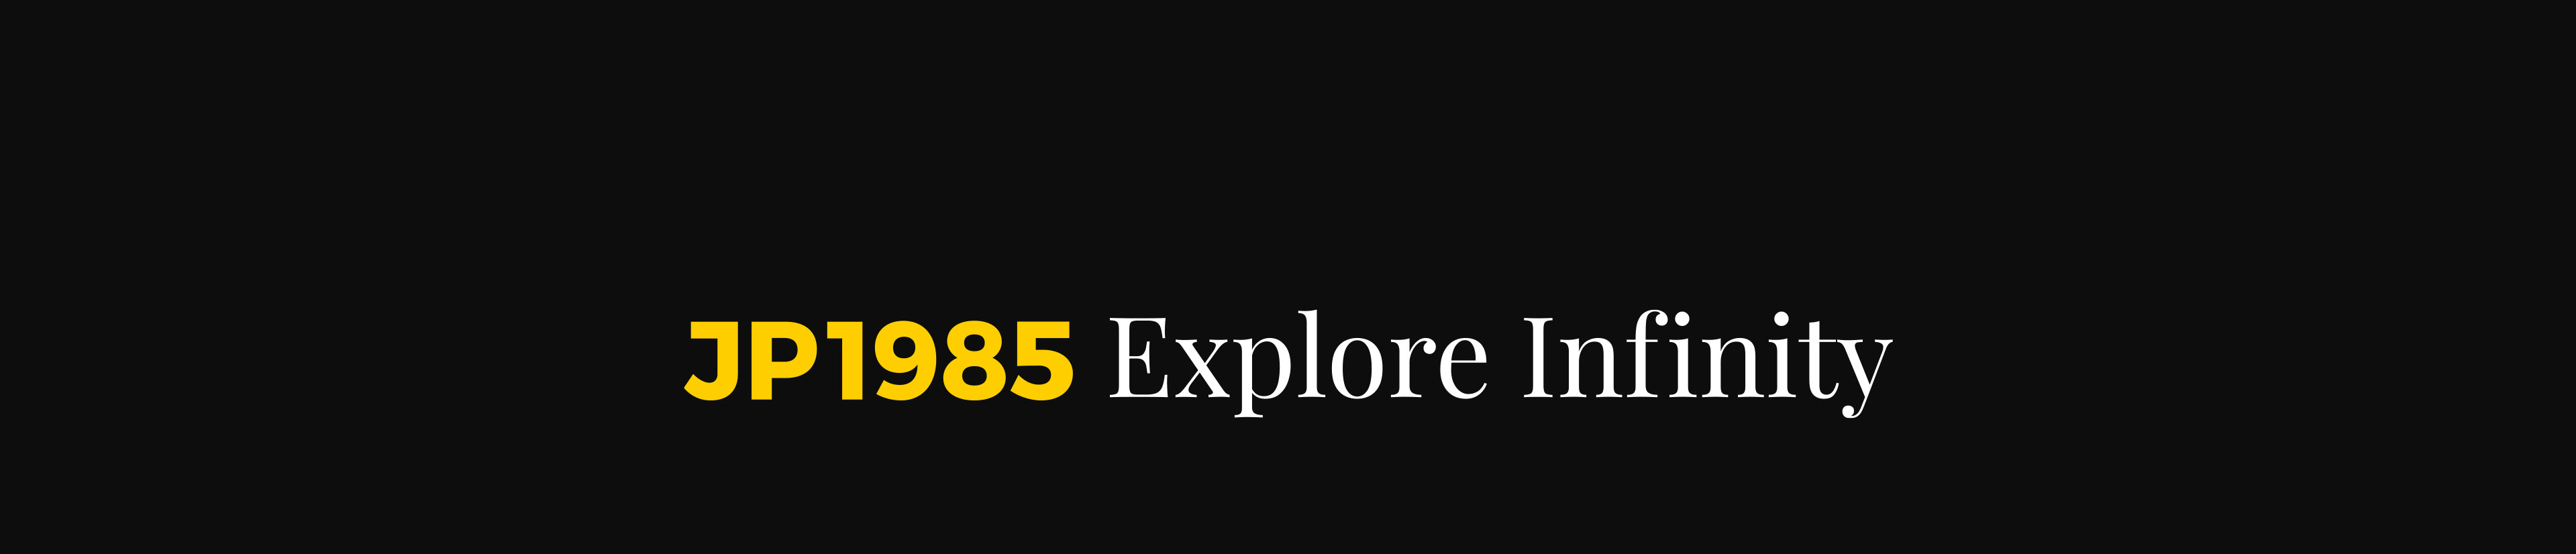 JP1985 ™ Explore Infinity's profile banner